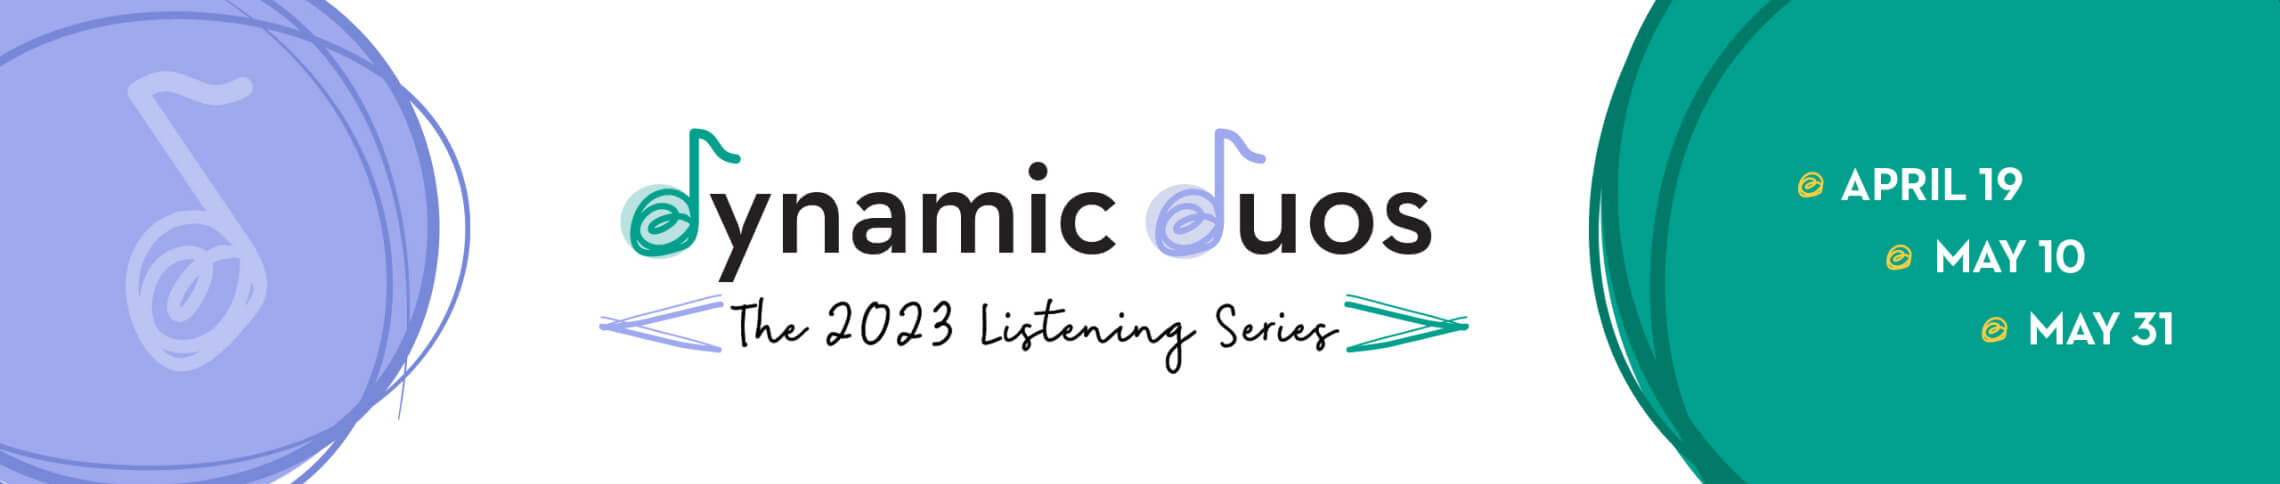 dynamic duos 2023 listening series branding